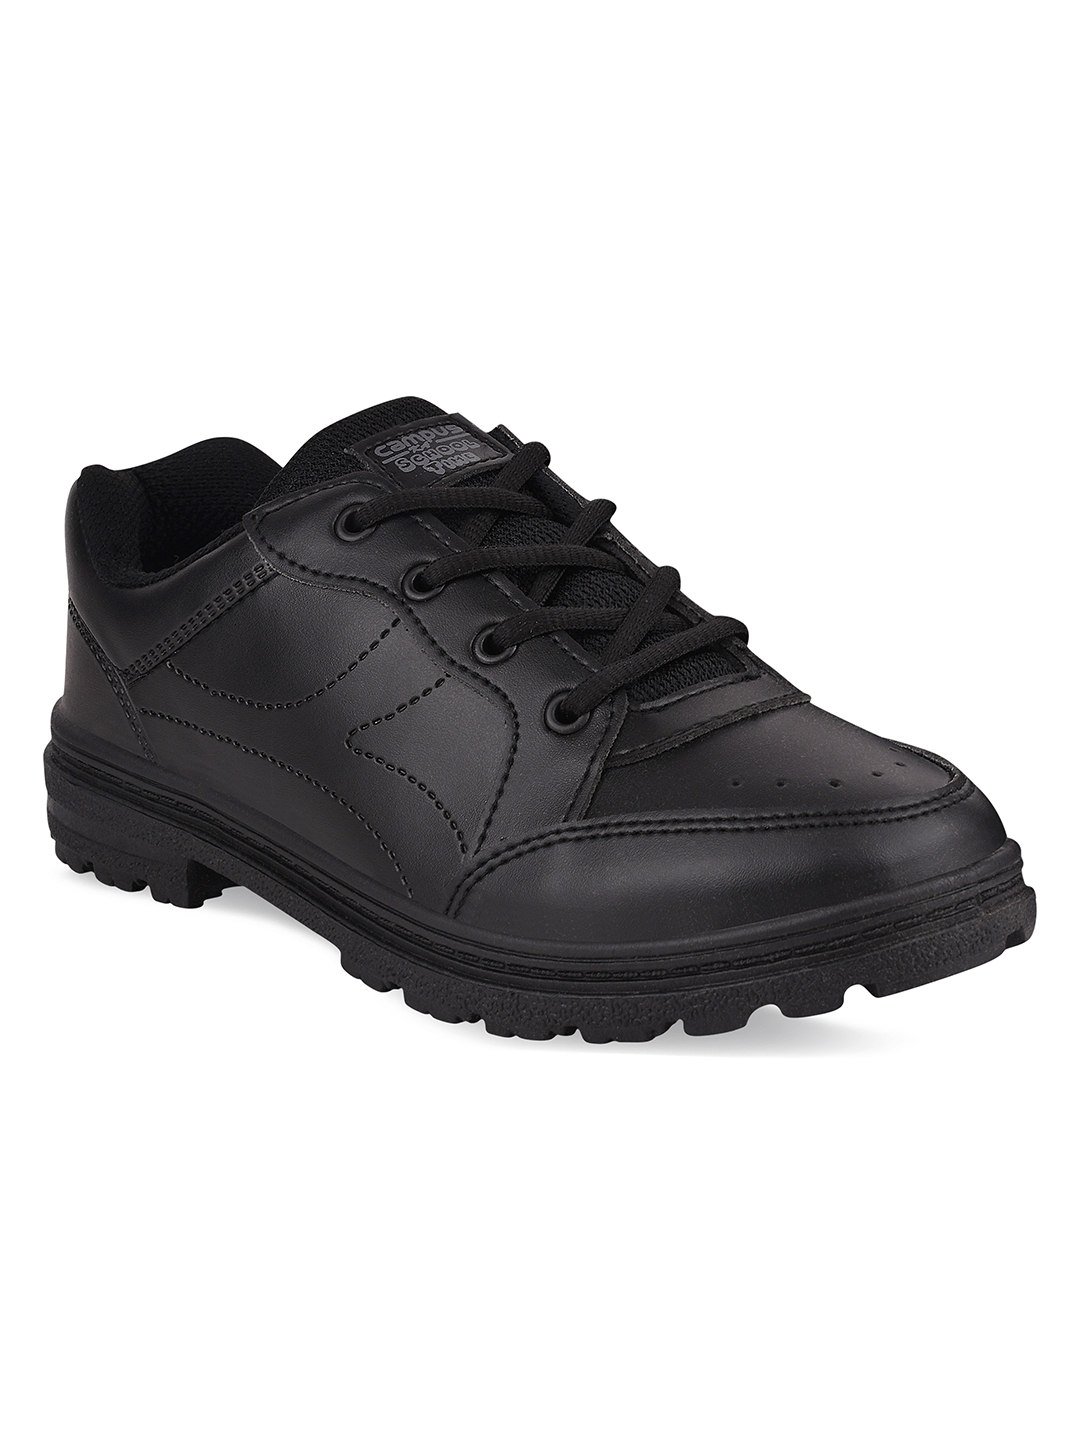 Boy's CS-63S Black PU School Shoes